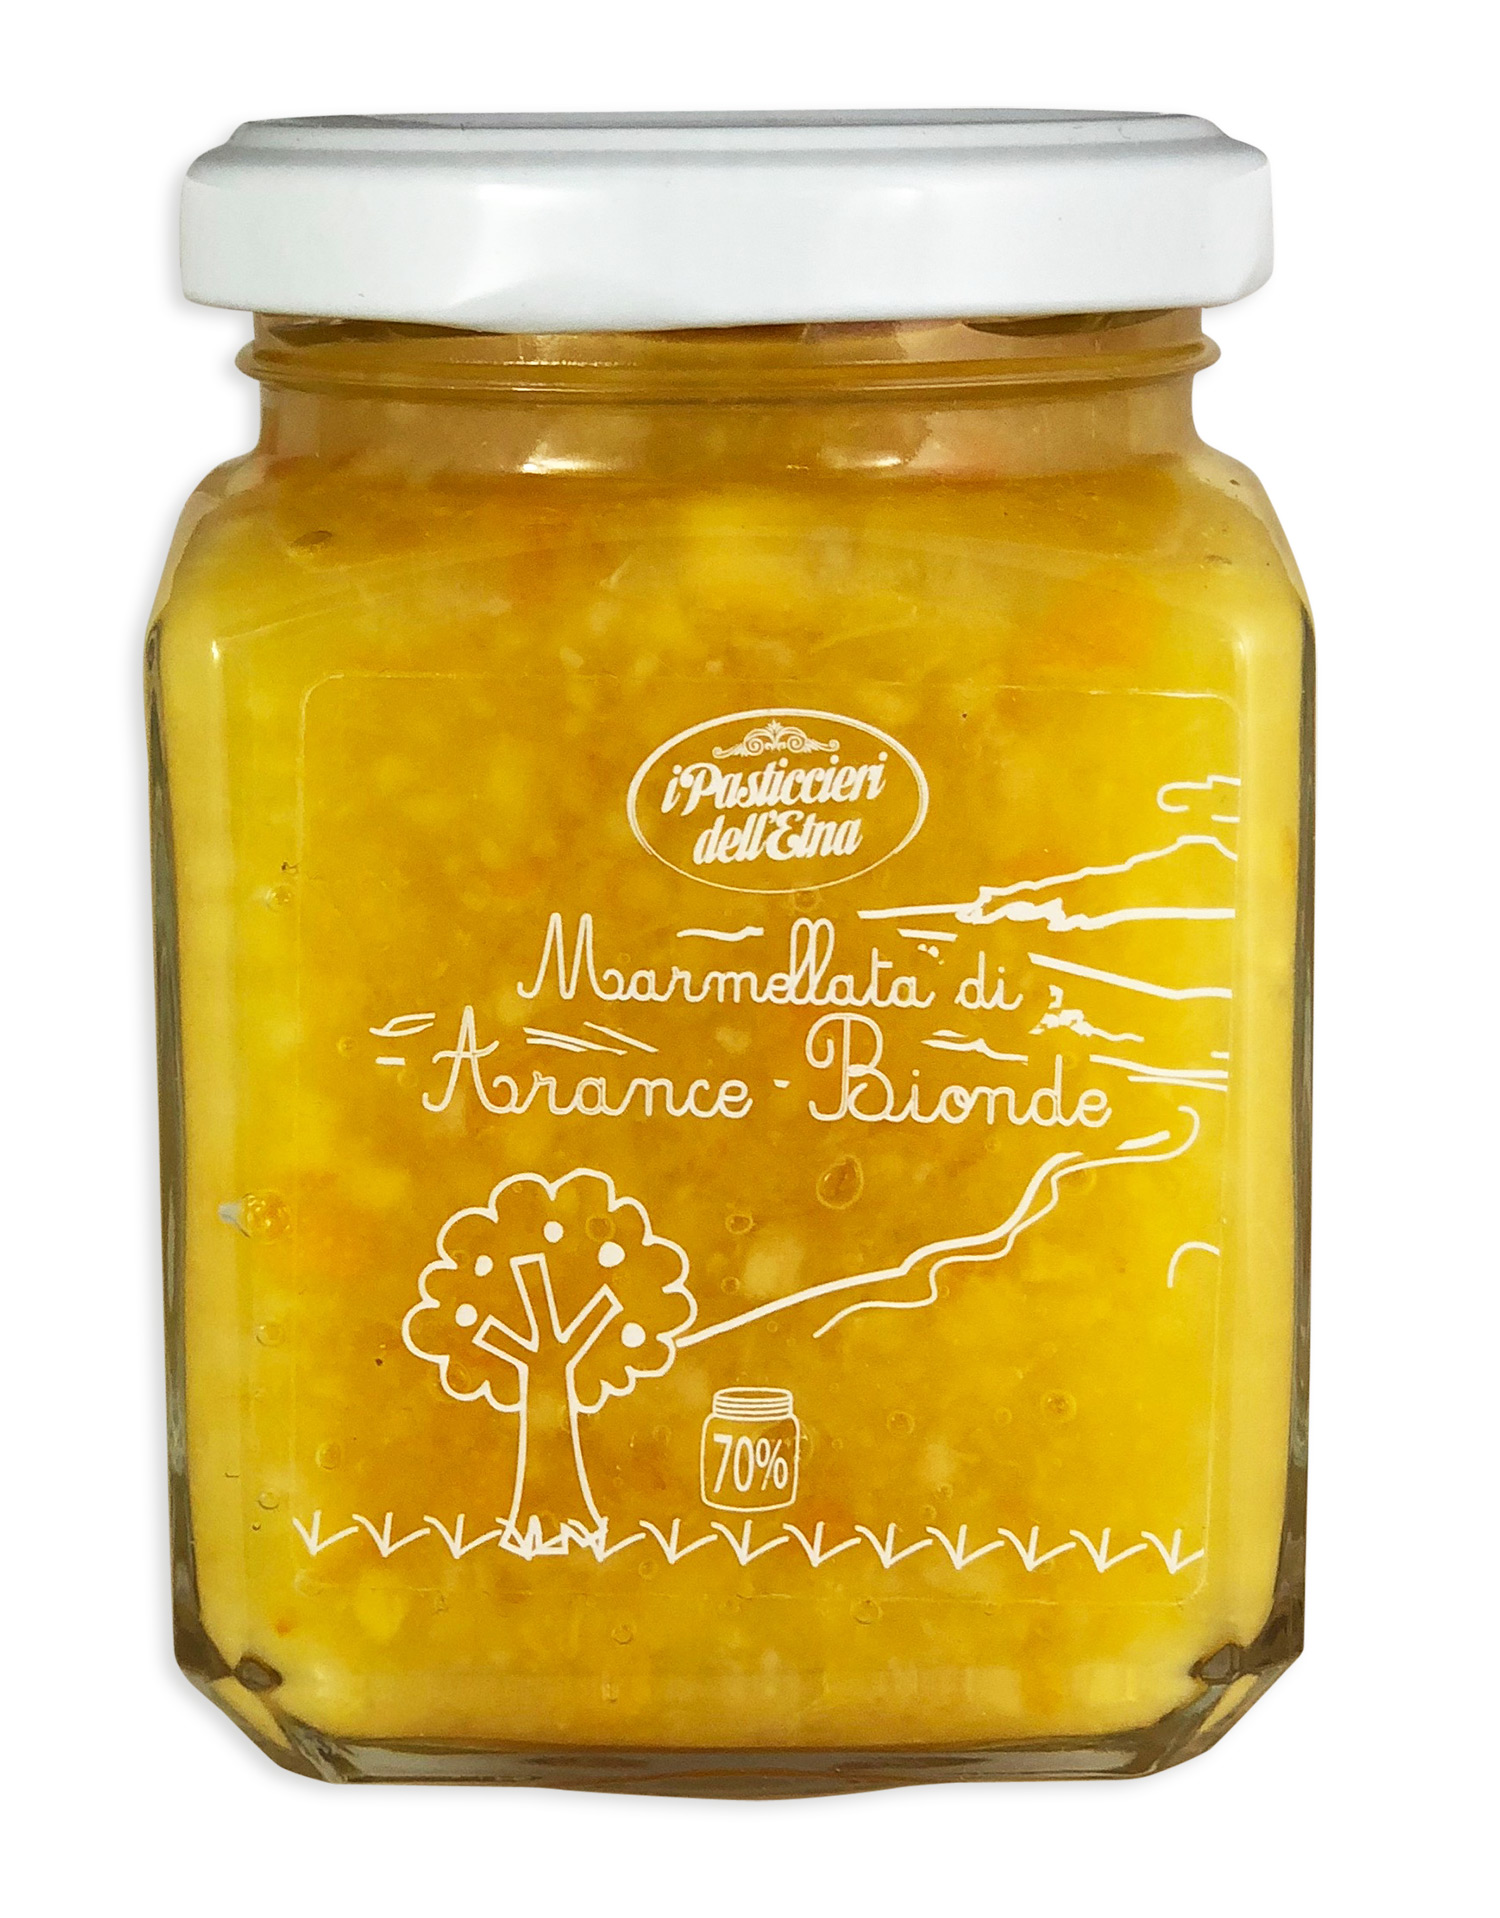 Orangen Marmelade - Arance bionde